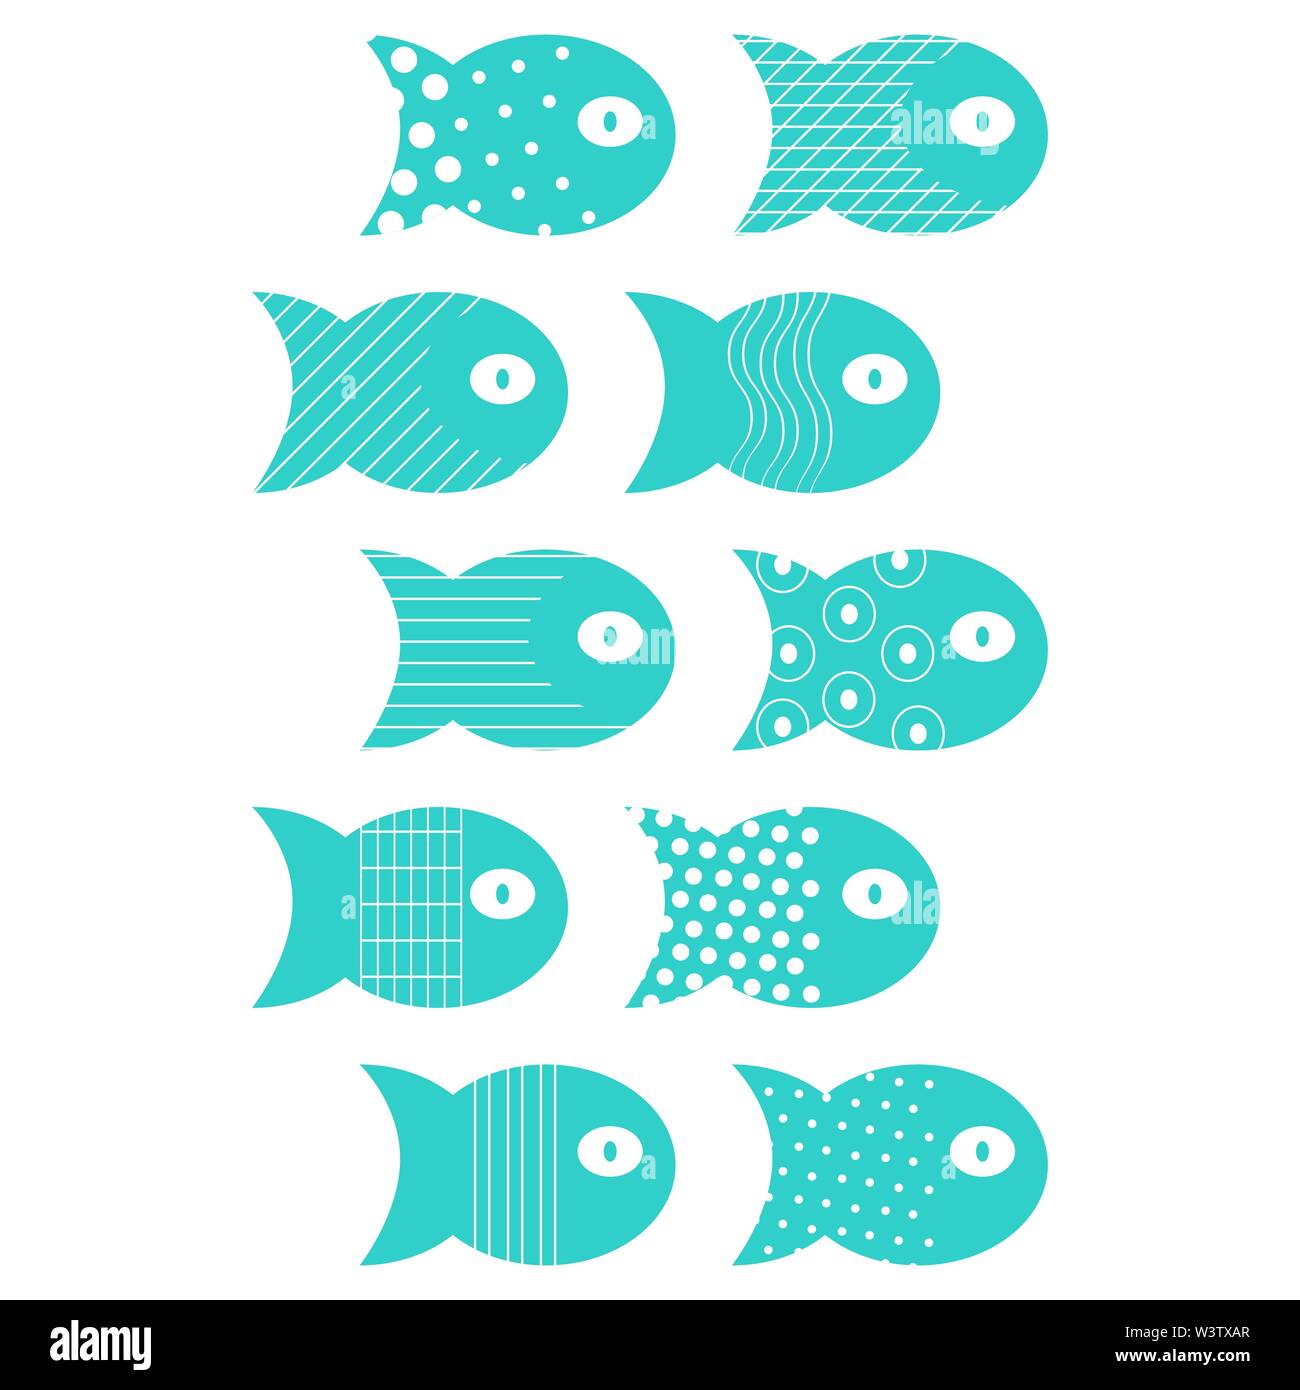 https://c8.alamy.com/comp/W3TXAR/simple-flat-fish-set-of-elements-for-fabric-textile-design-pillows-wallpapersclothbagsscrapbook-paper-vector-illustration-W3TXAR.jpg